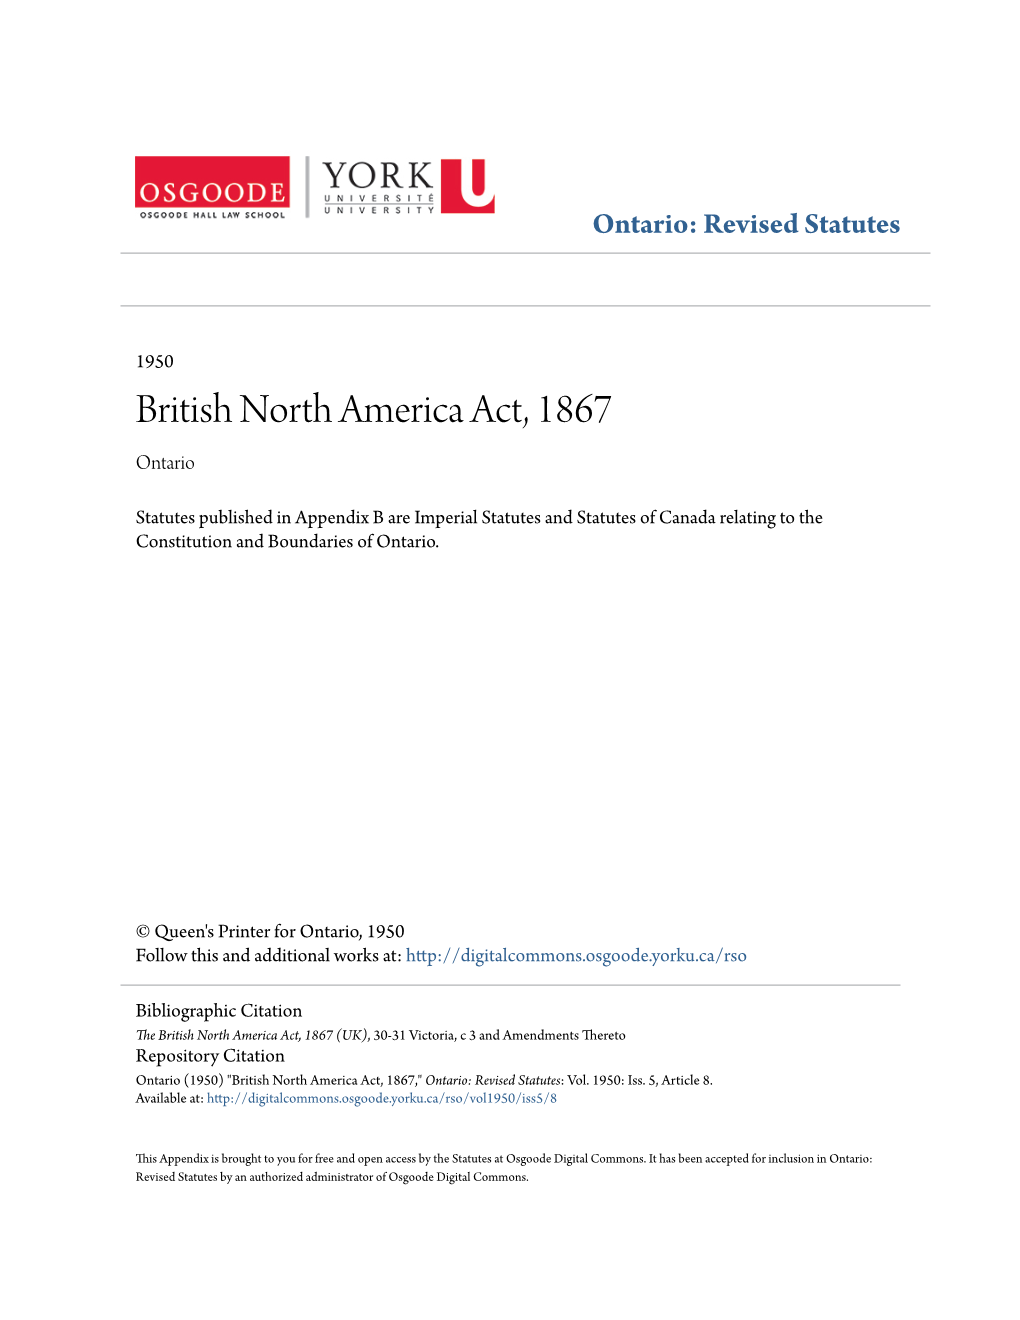 British North America Act, 1867 Ontario